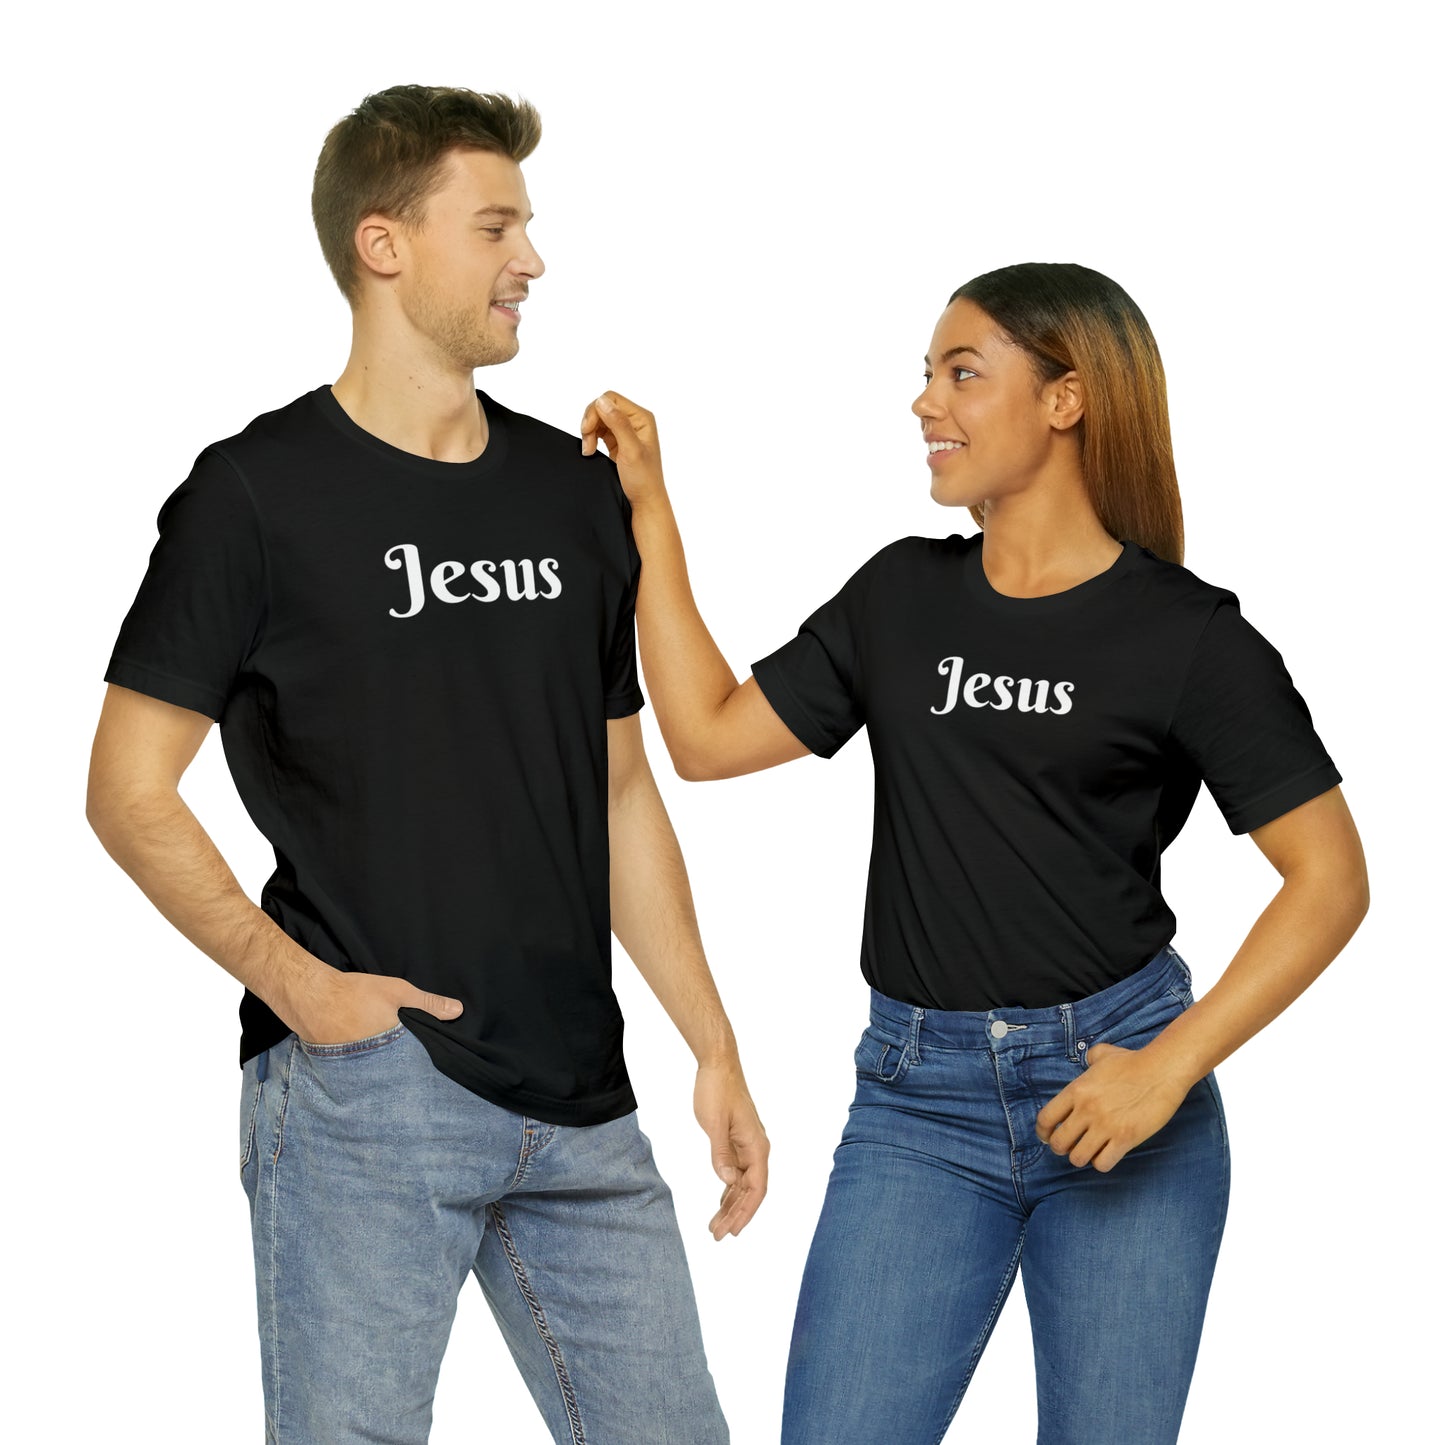 Jesus T-shirt - Small - 3XL